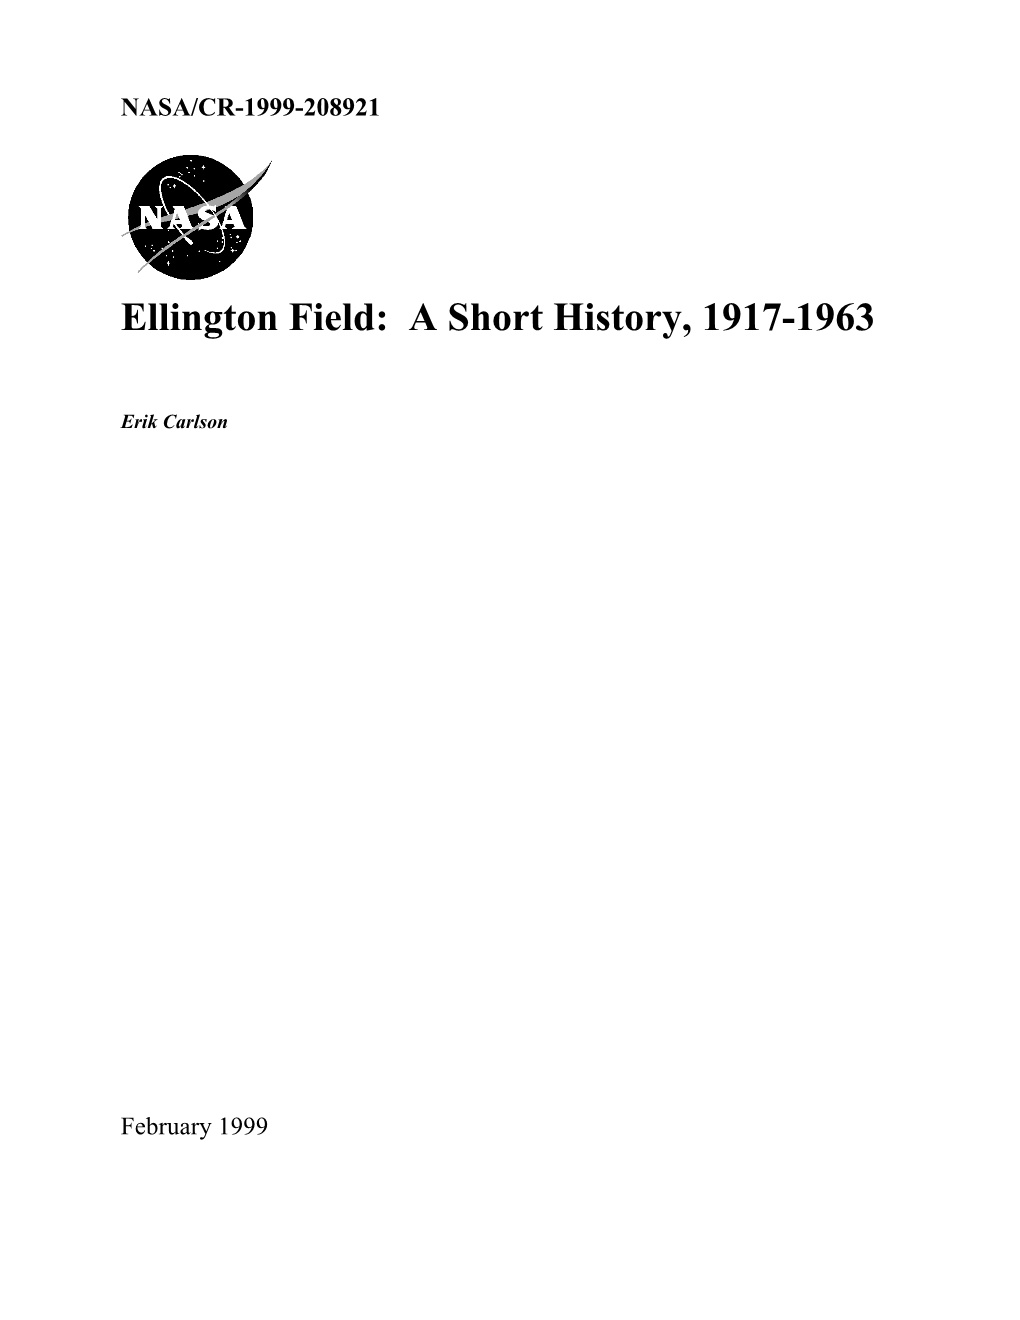 Ellington Field: a Short History, 1917-1963